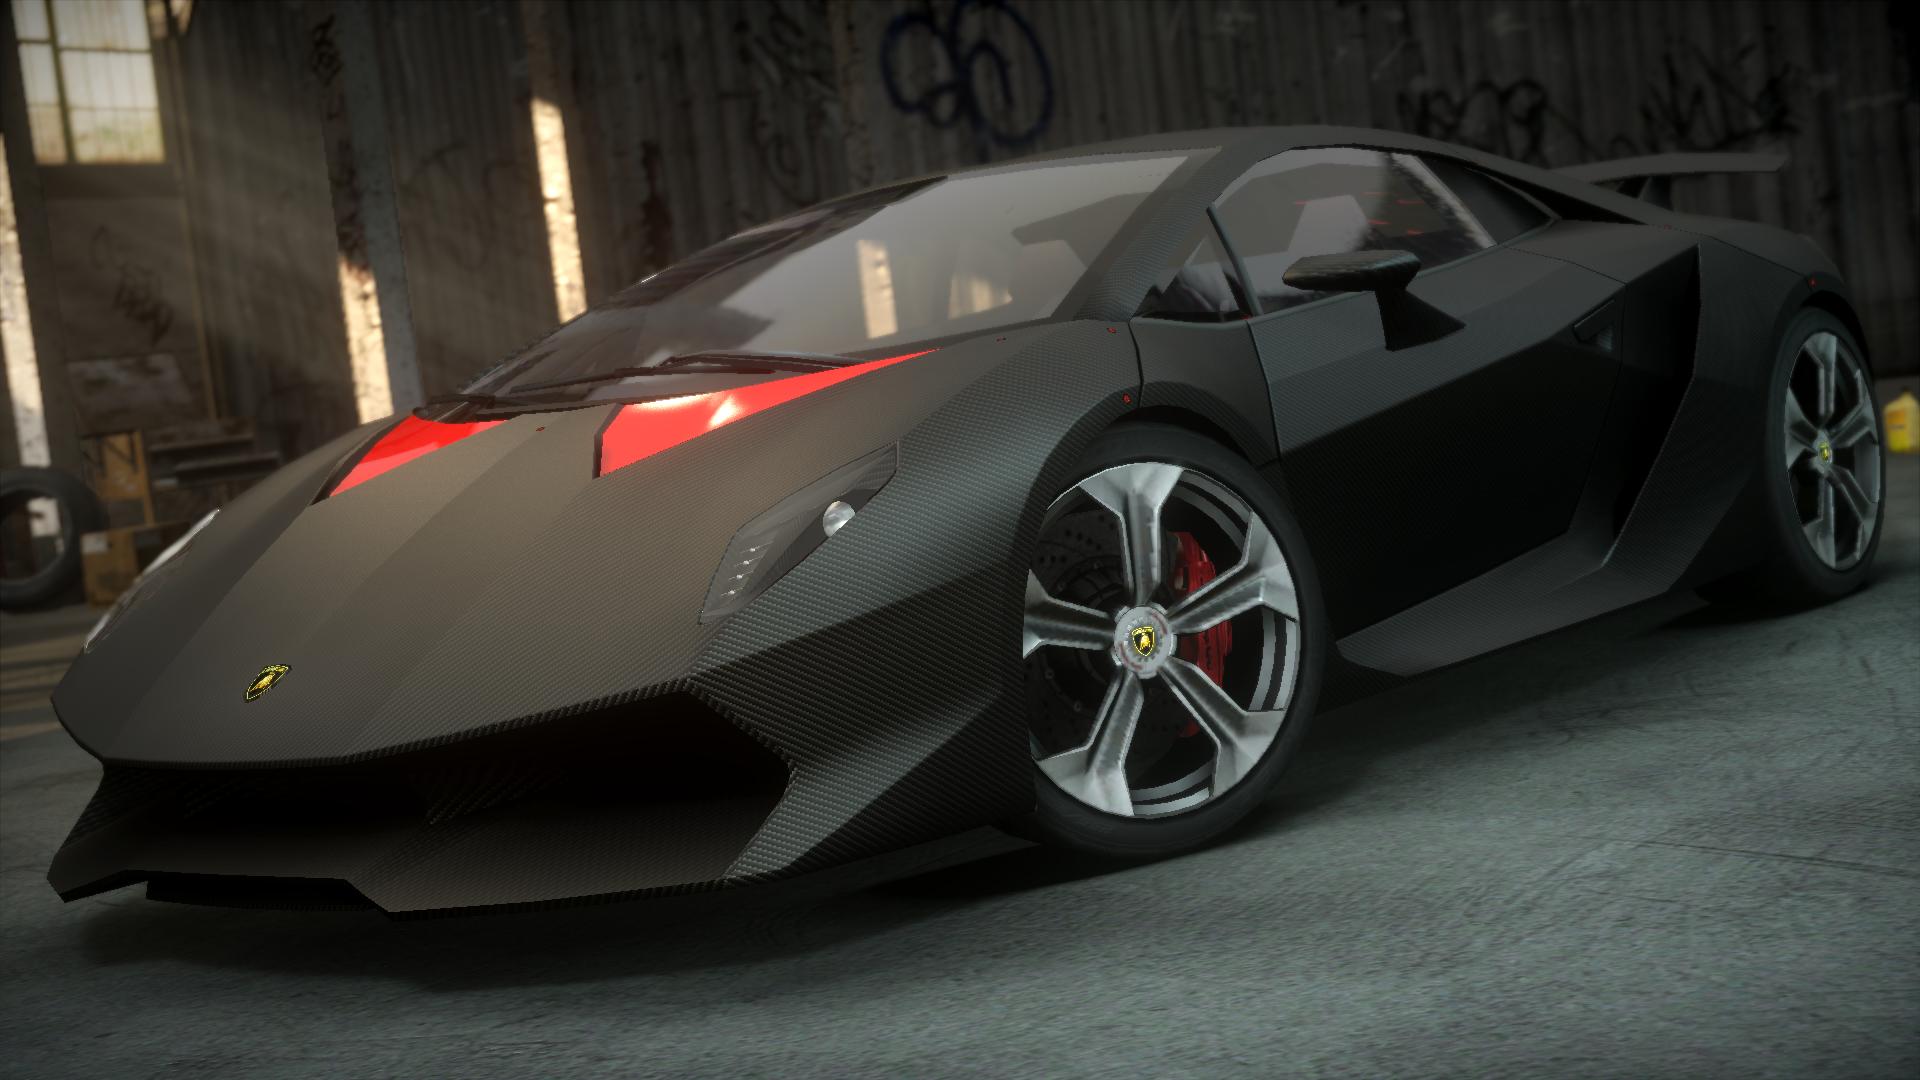 Lamborghini Need For Speed Movie - All About Lamborghini